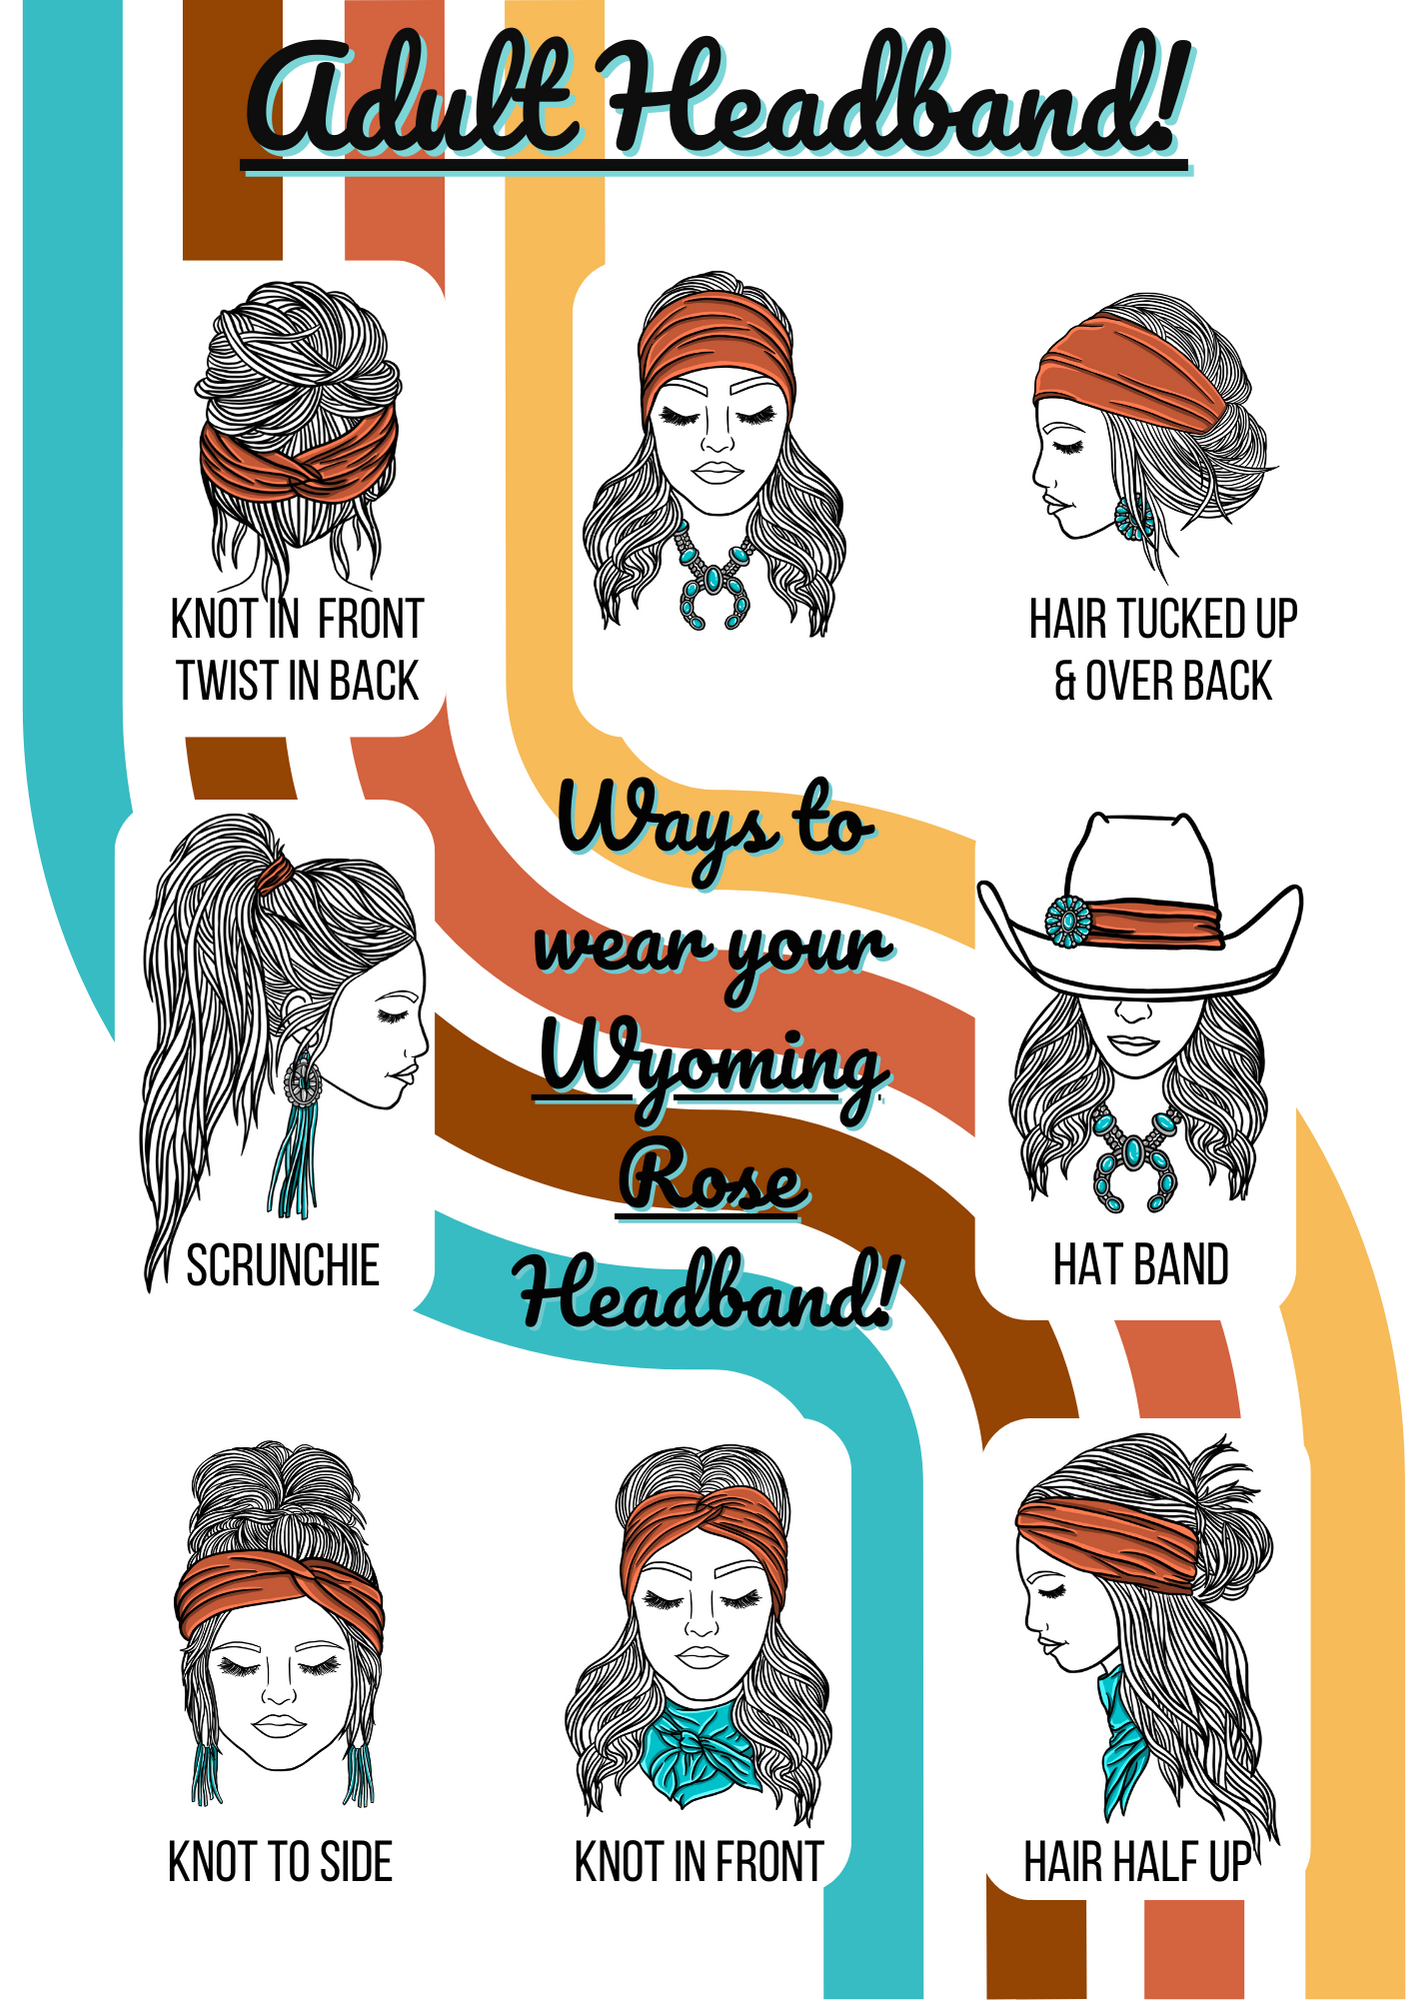 Ways to wear your Wyoming Rose headband!